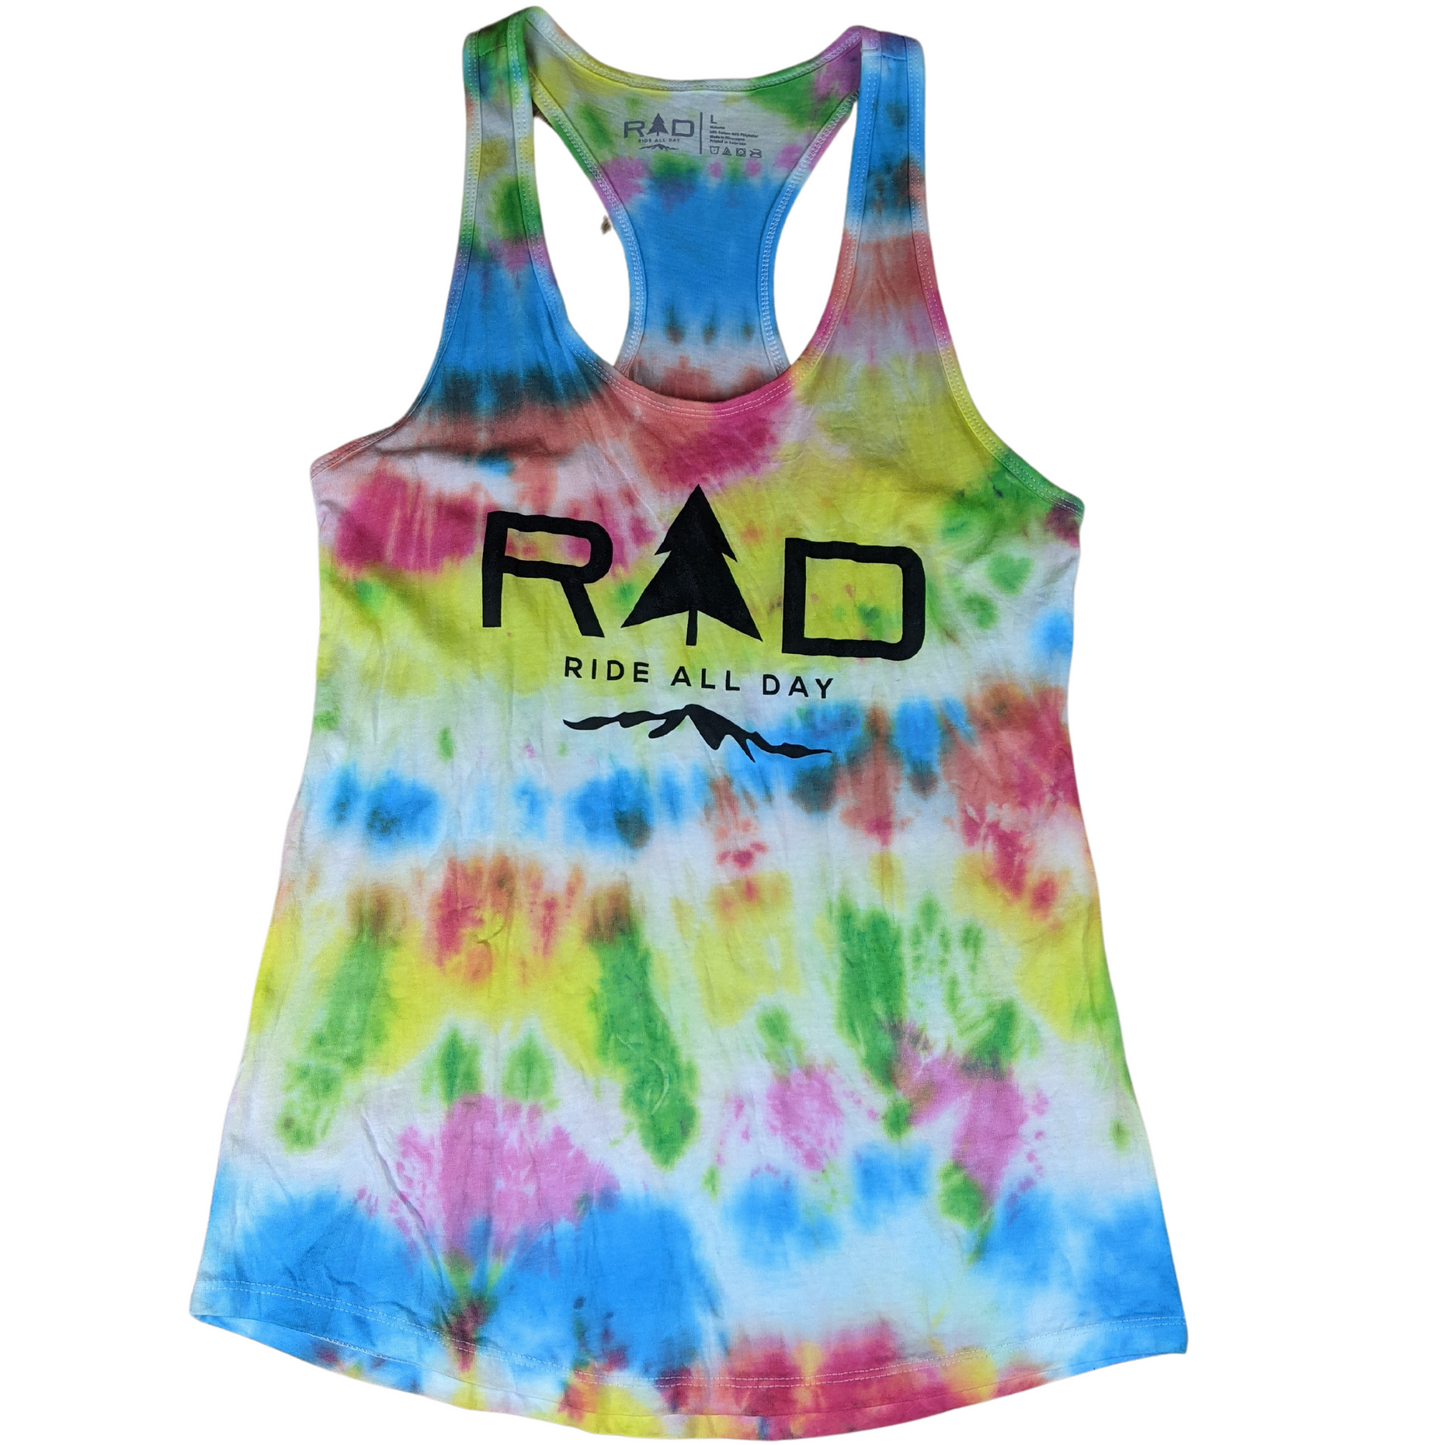 RAD Ladies racerback tank top in ombre watercolor tie dye pattern